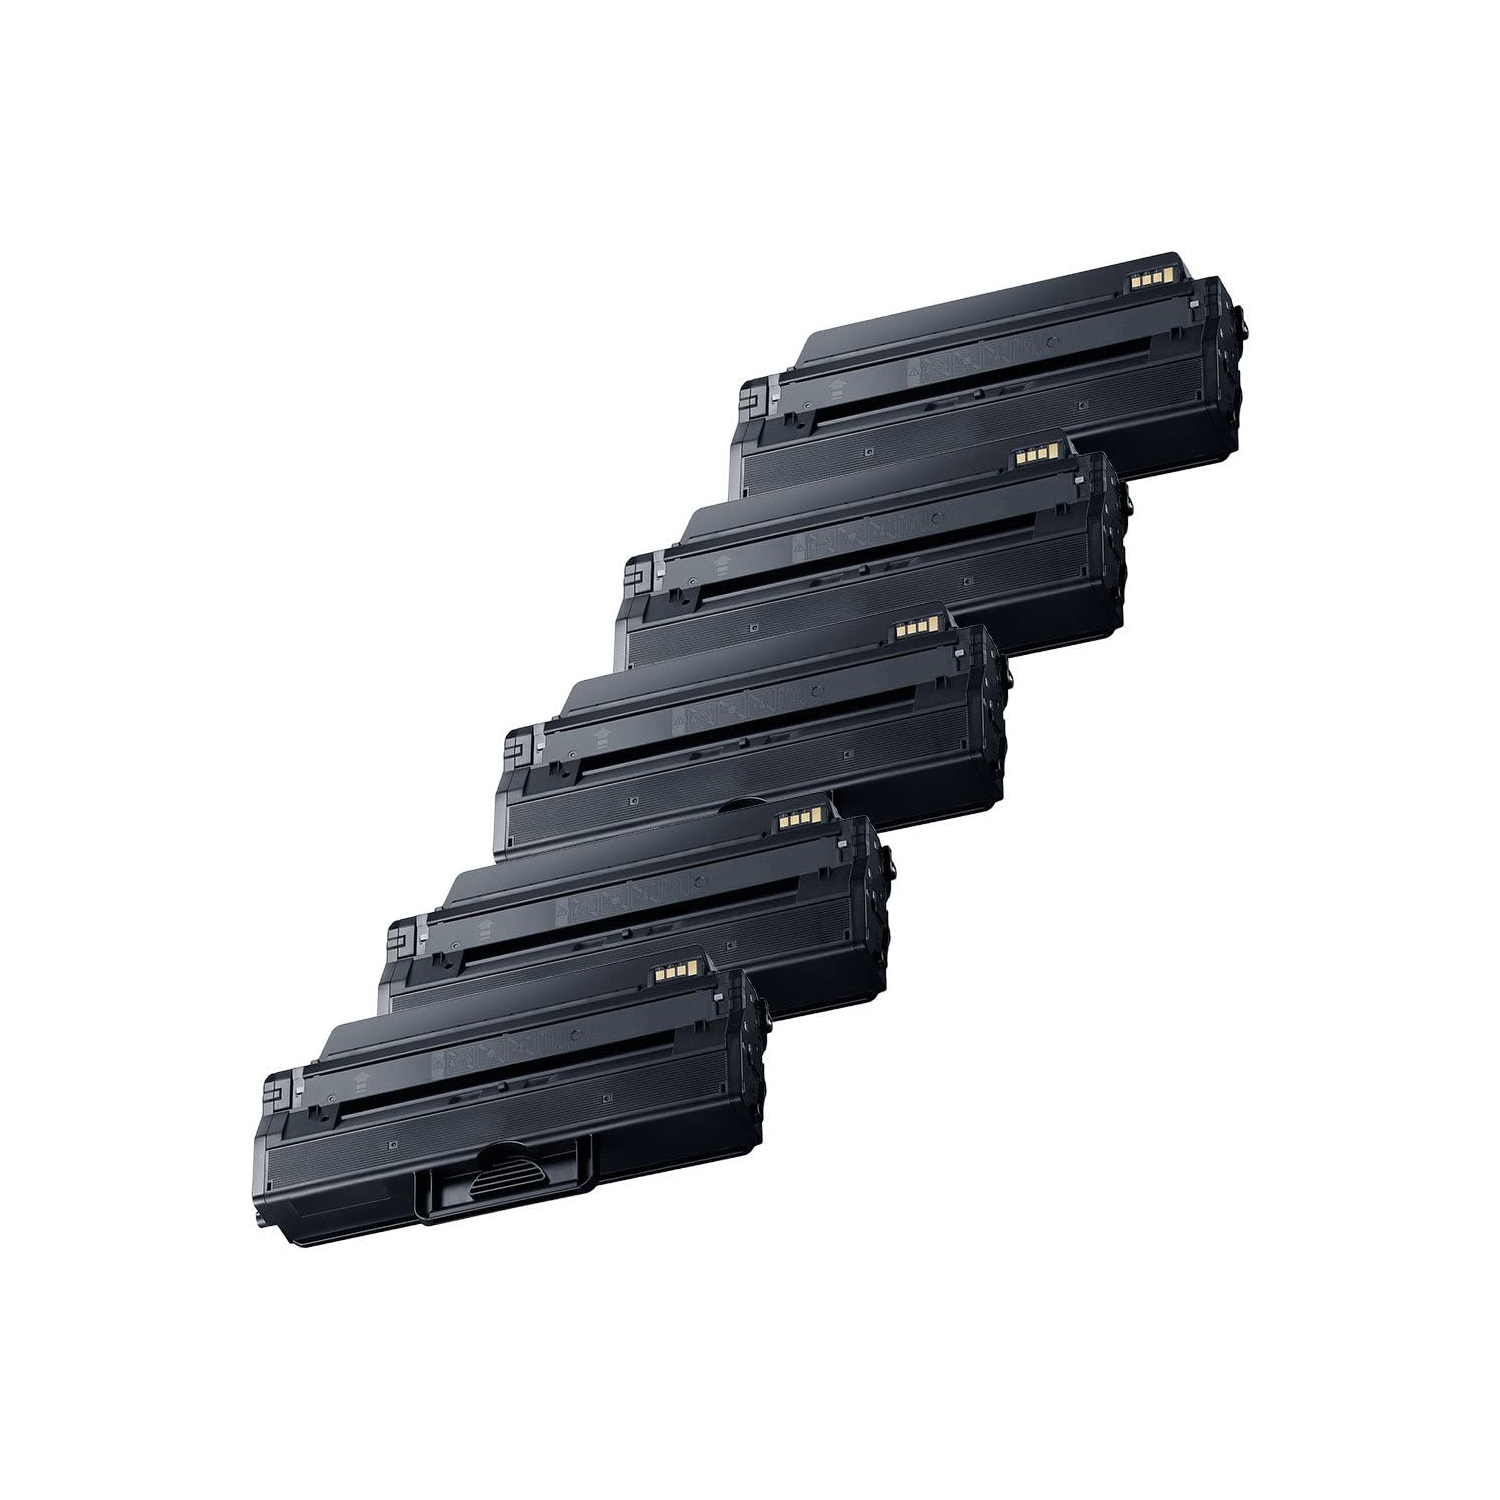 5 Inkfirst® Toner Cartridges D115L MLT-D115L Compatible Remanufactured for Samsung D115L Black Xpress SL-M2880FW SL-M2830DW